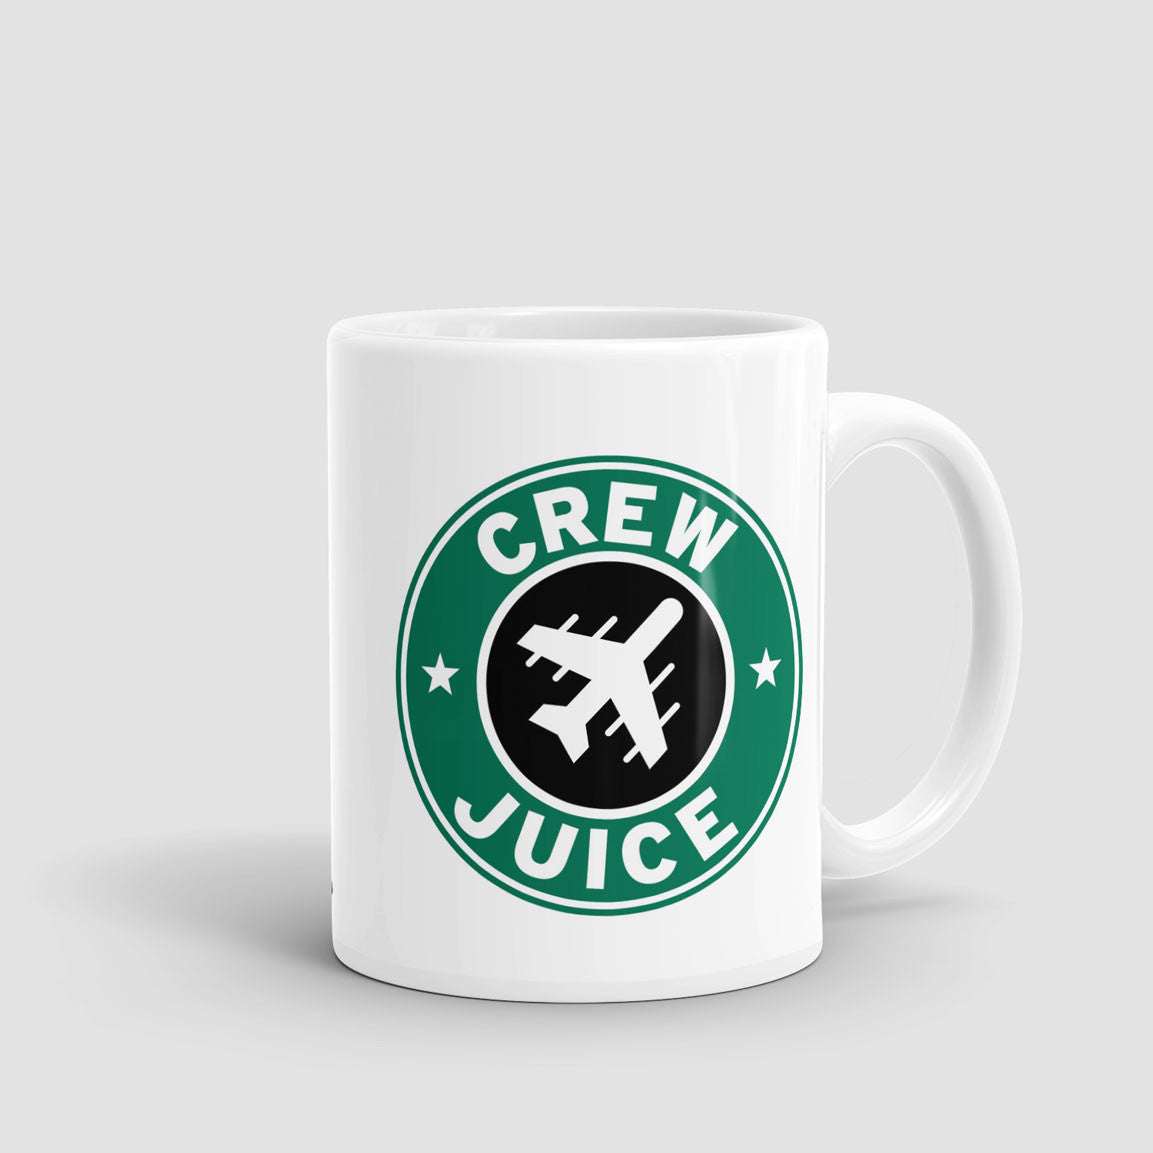 Crew Juice - Mug - Airportag